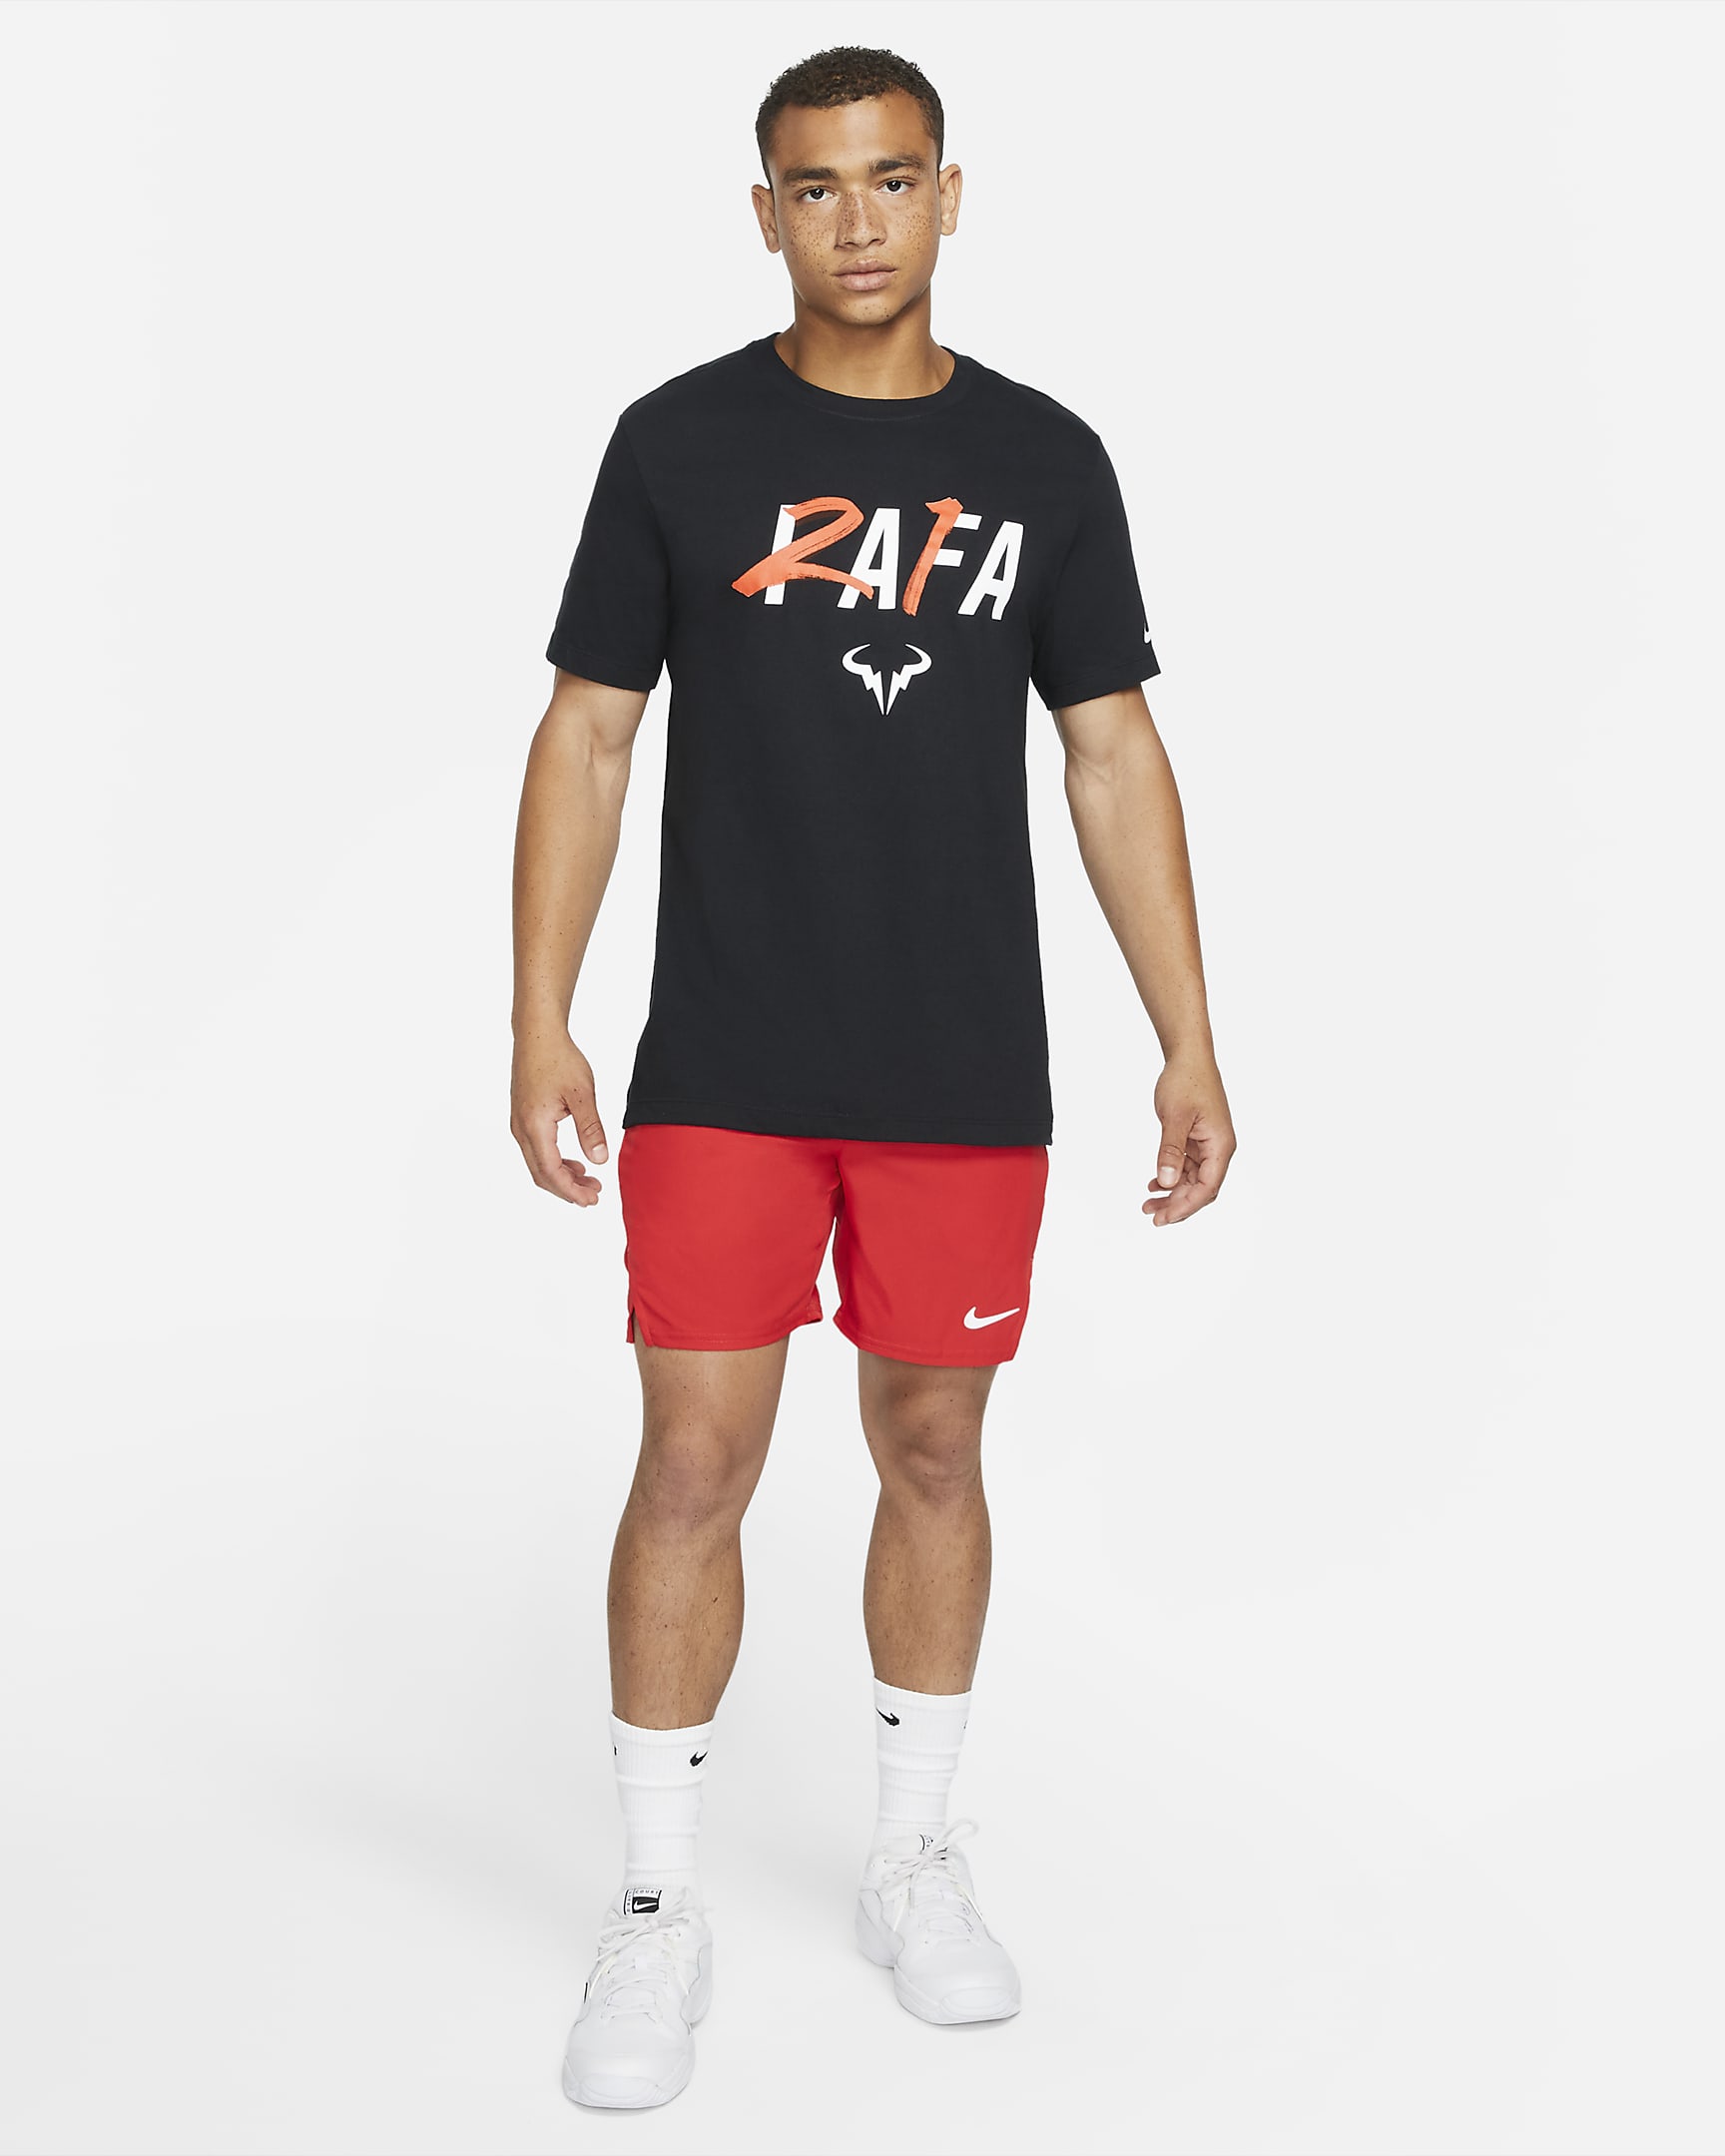 Rafa Winner Men's Tennis T-Shirt. Nike IN